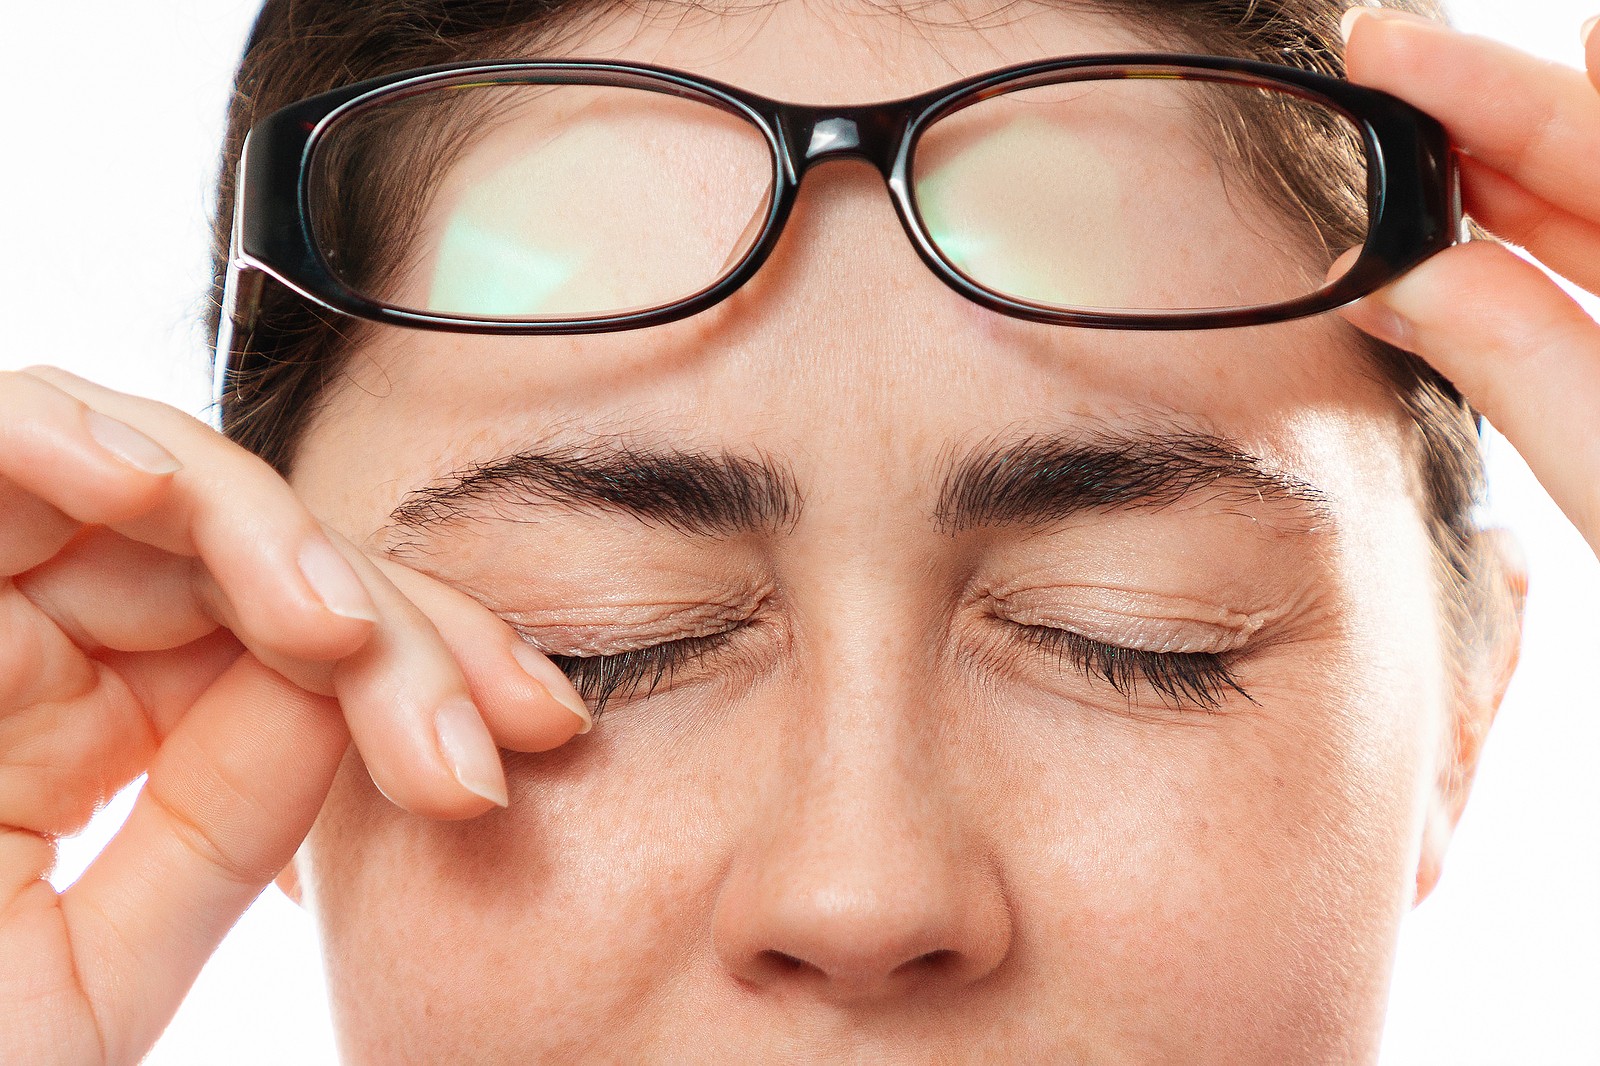 common causes of eye pain kleiman evangelista